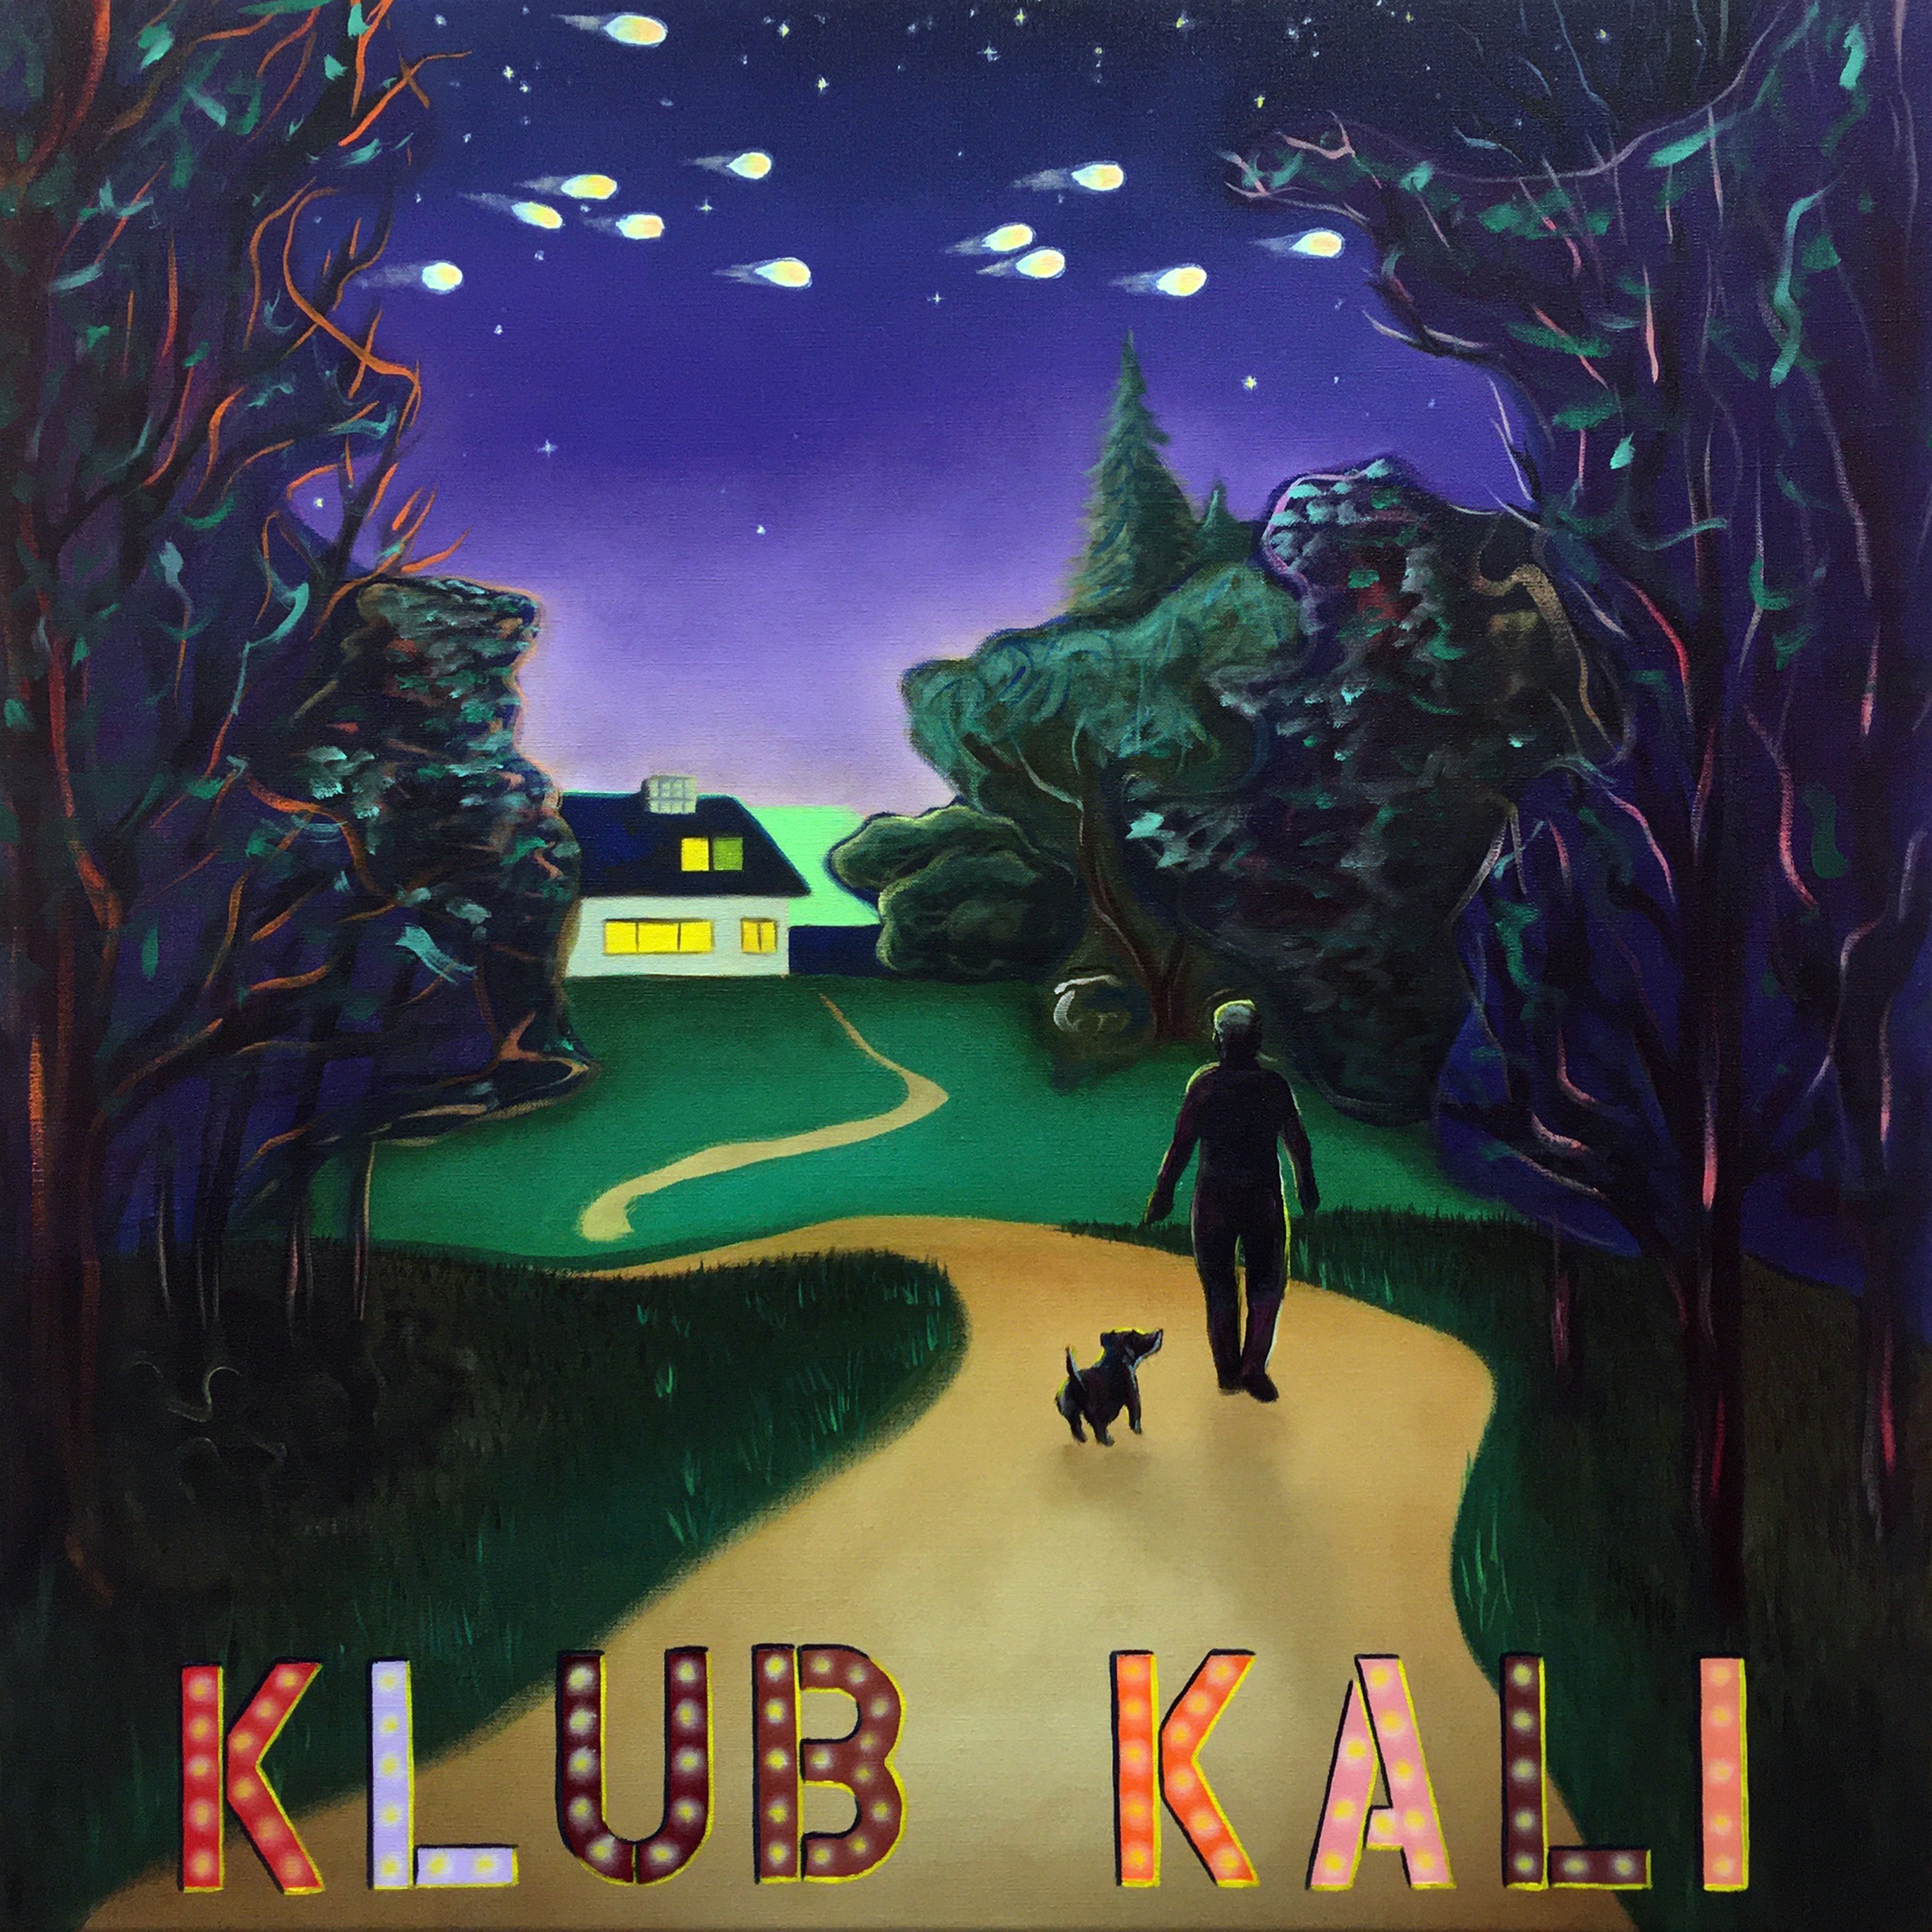 Klub Kali Record Cover
2021
oil on canvas
70 x 70cm